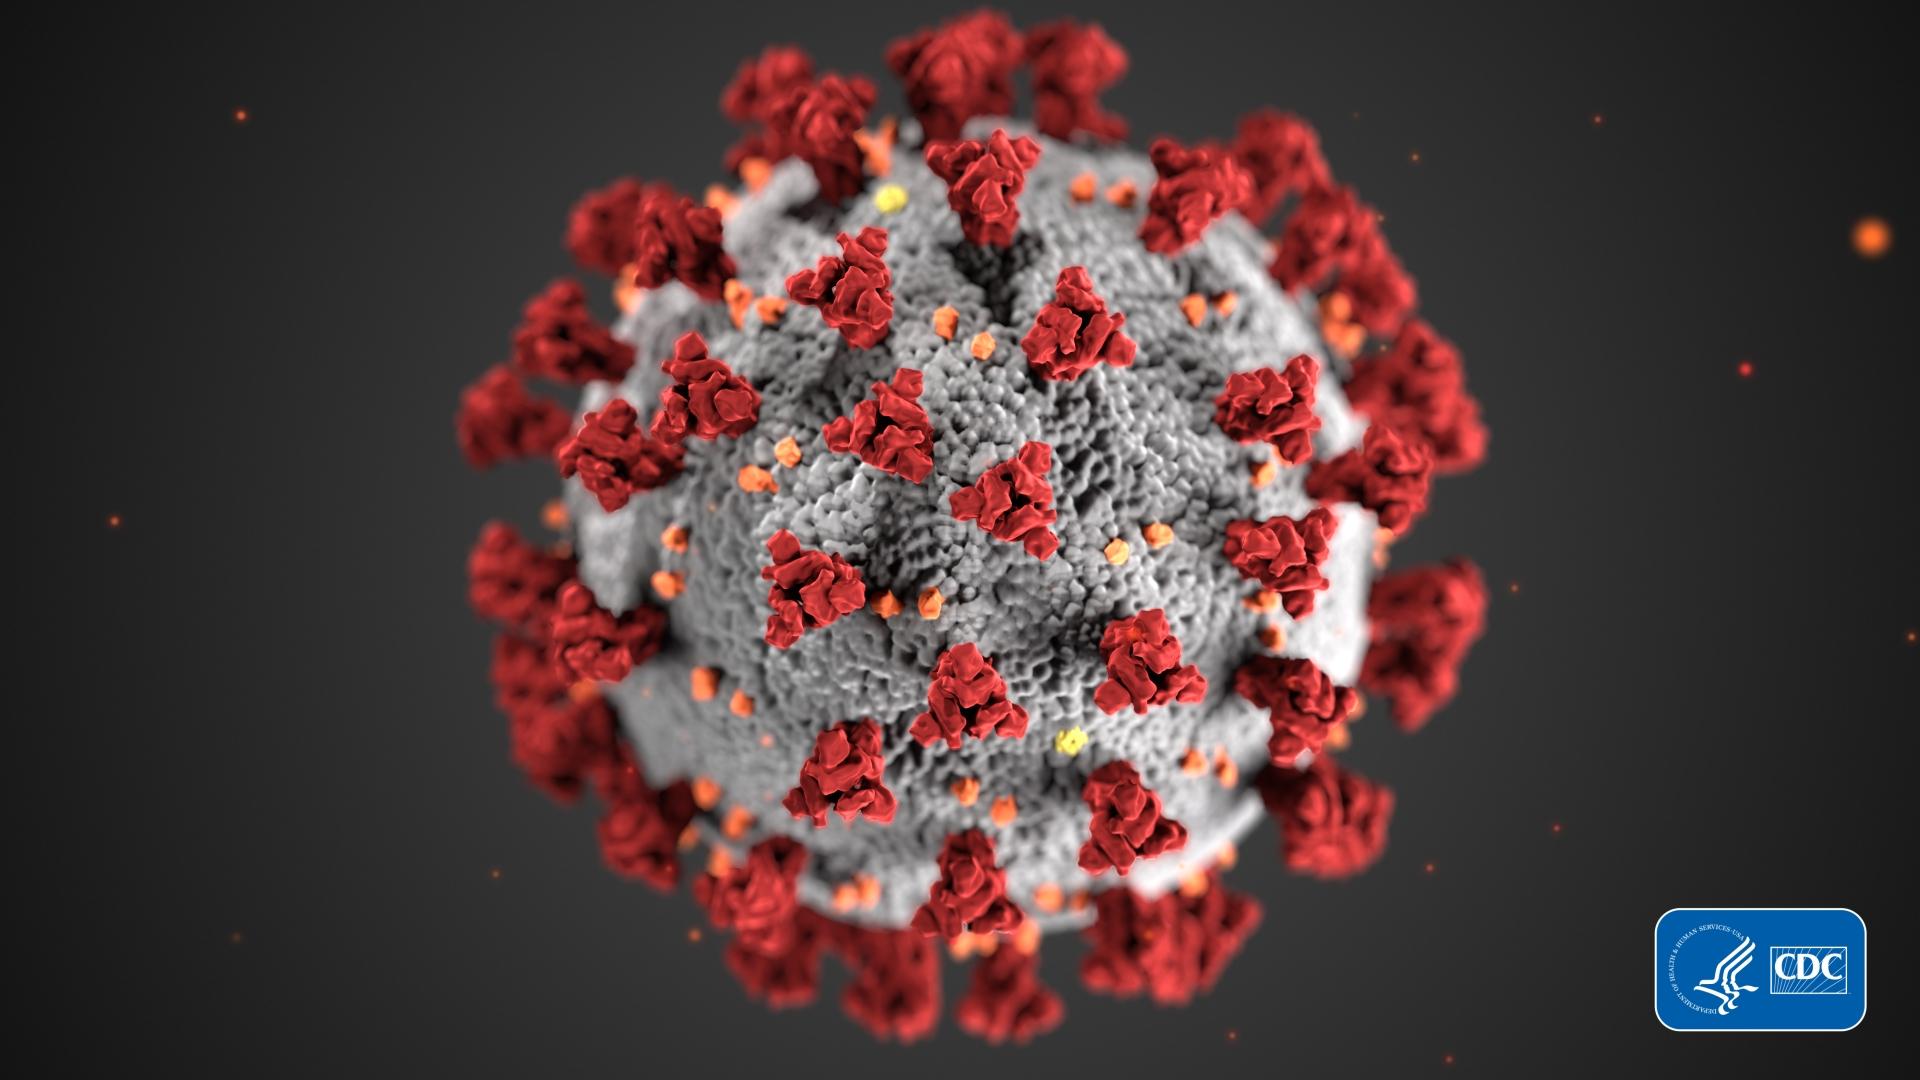 Latest: Two Cases of Coronavirus Recorded in Pennsylvania